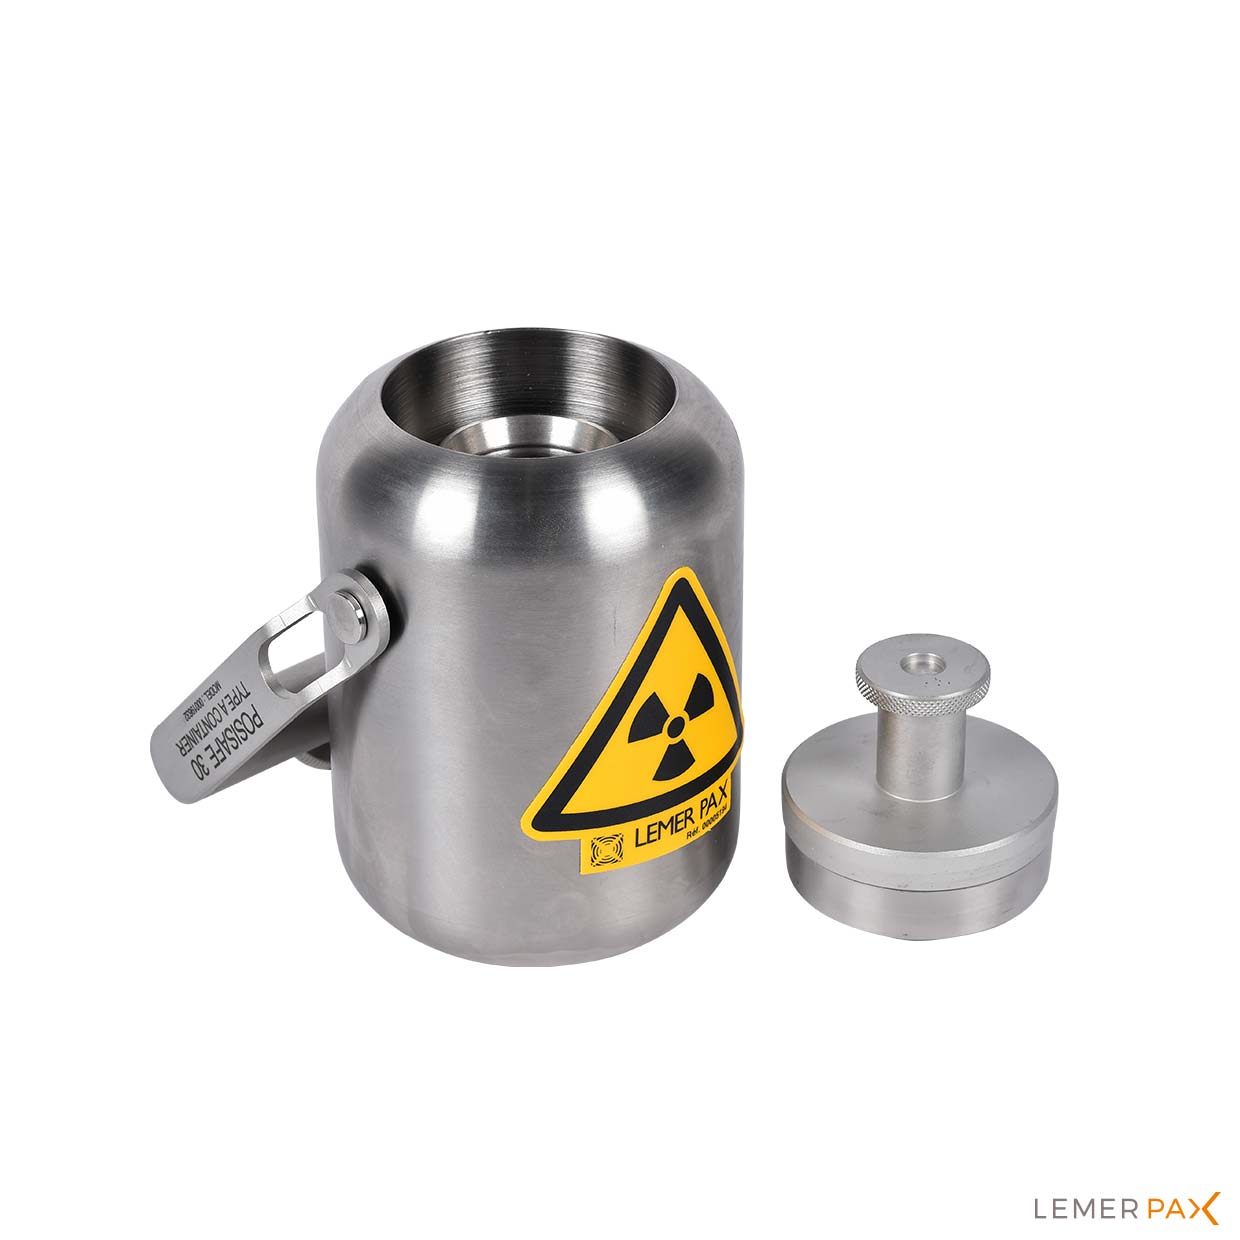 Shield cans. Радиационно защитные боксы Lemer Pax. Lemer Pax PD 140. Titanium Container for Radioactive. Lemer.